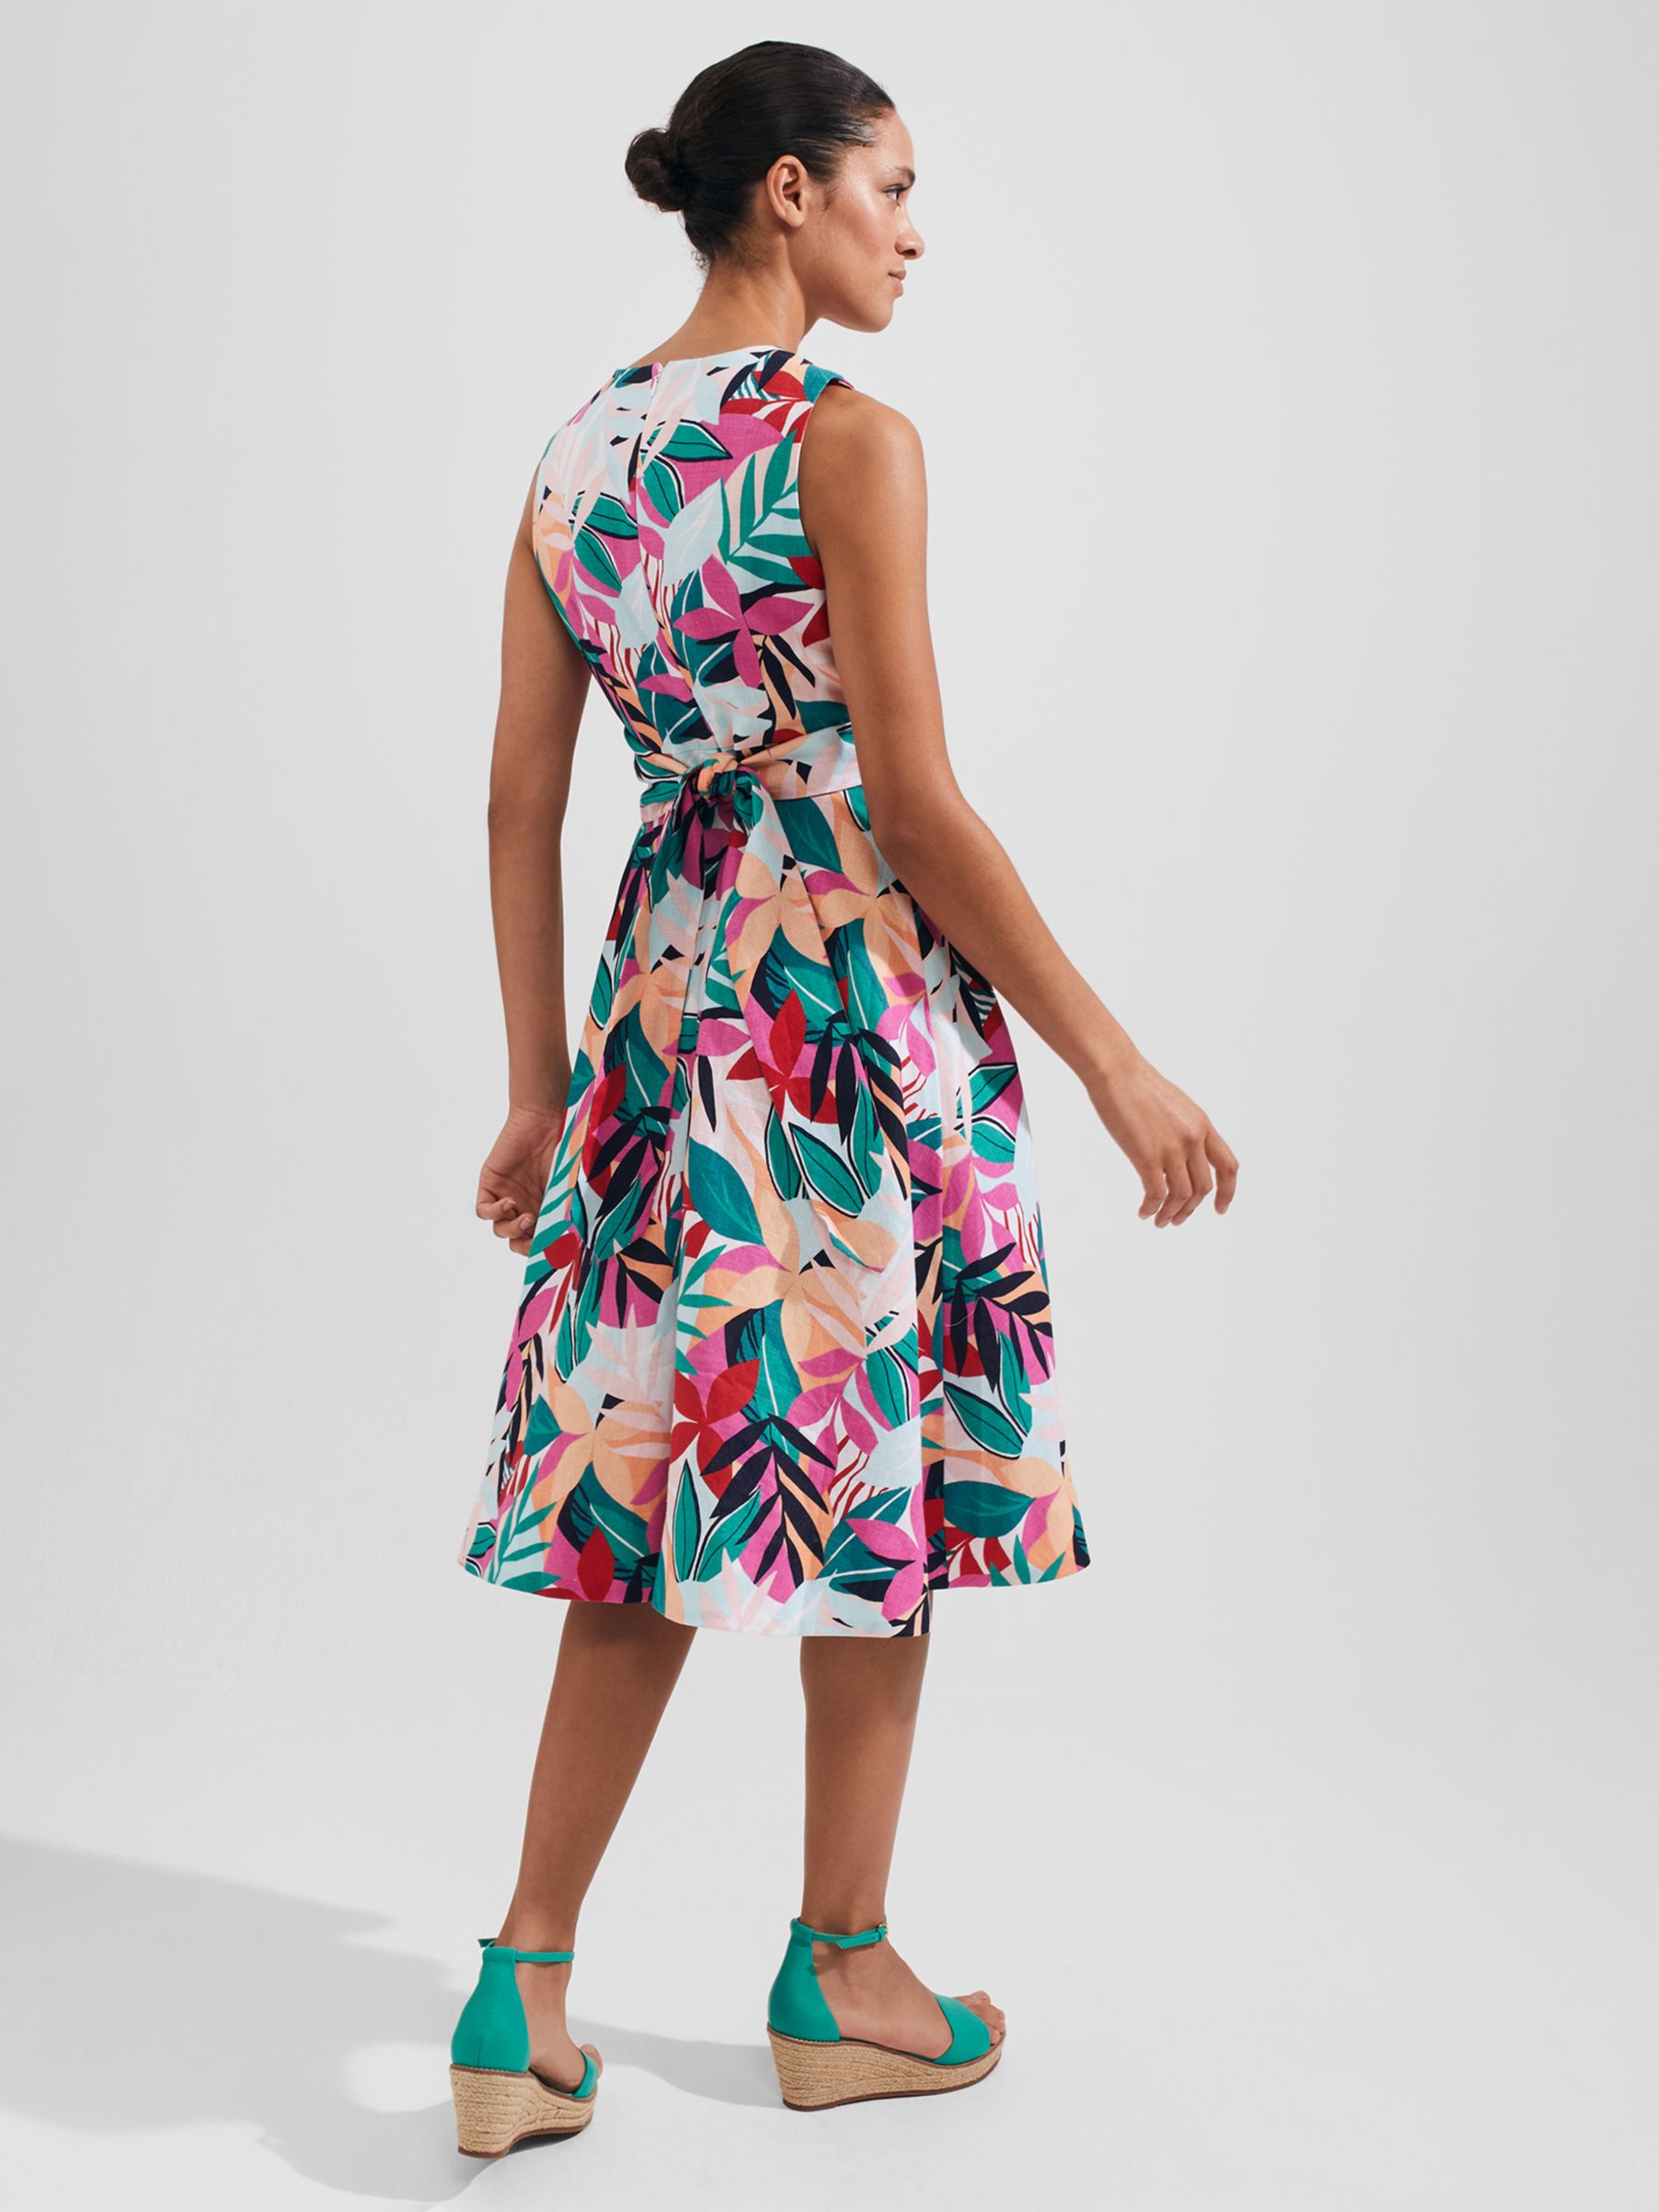 Hobbs Petite Mariella Leaf Print Linen Dress, Multi, 14